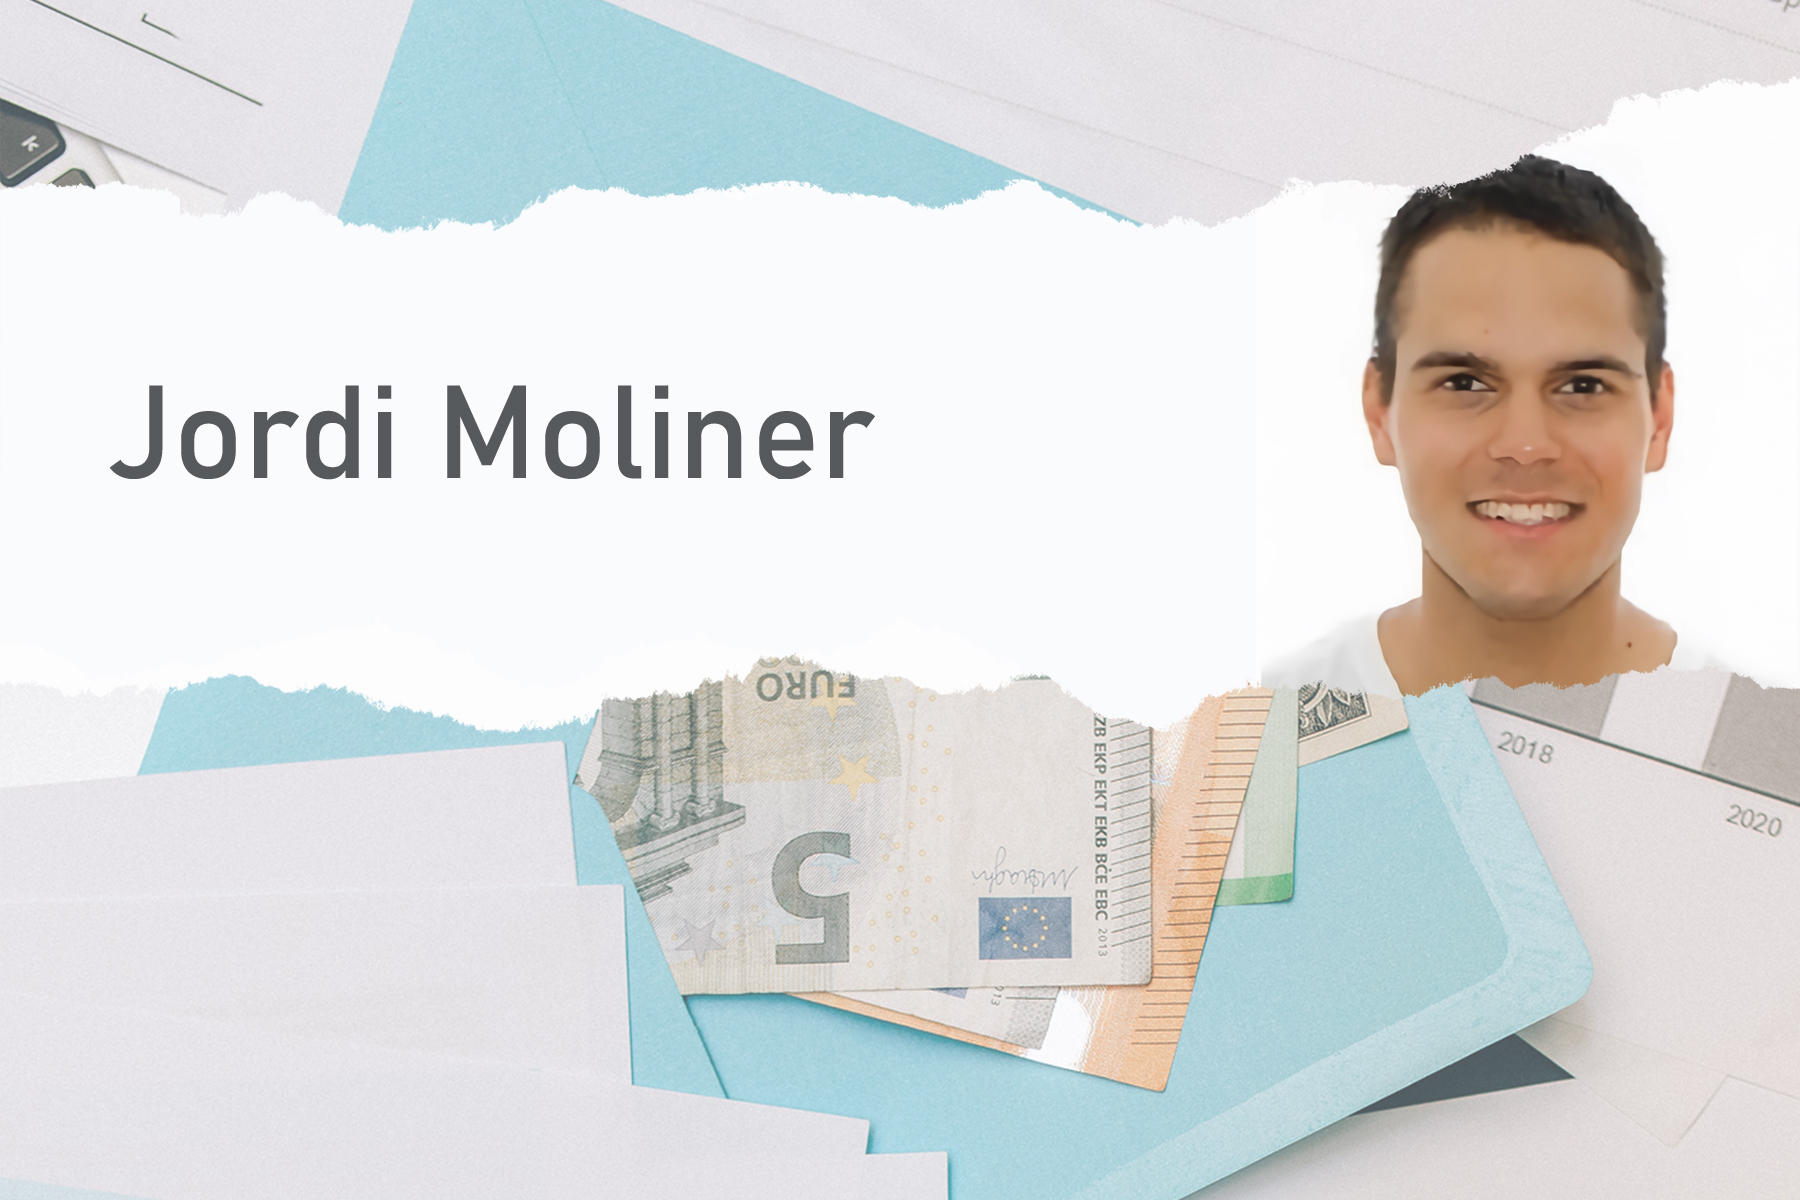 Jordi Moliner finances index